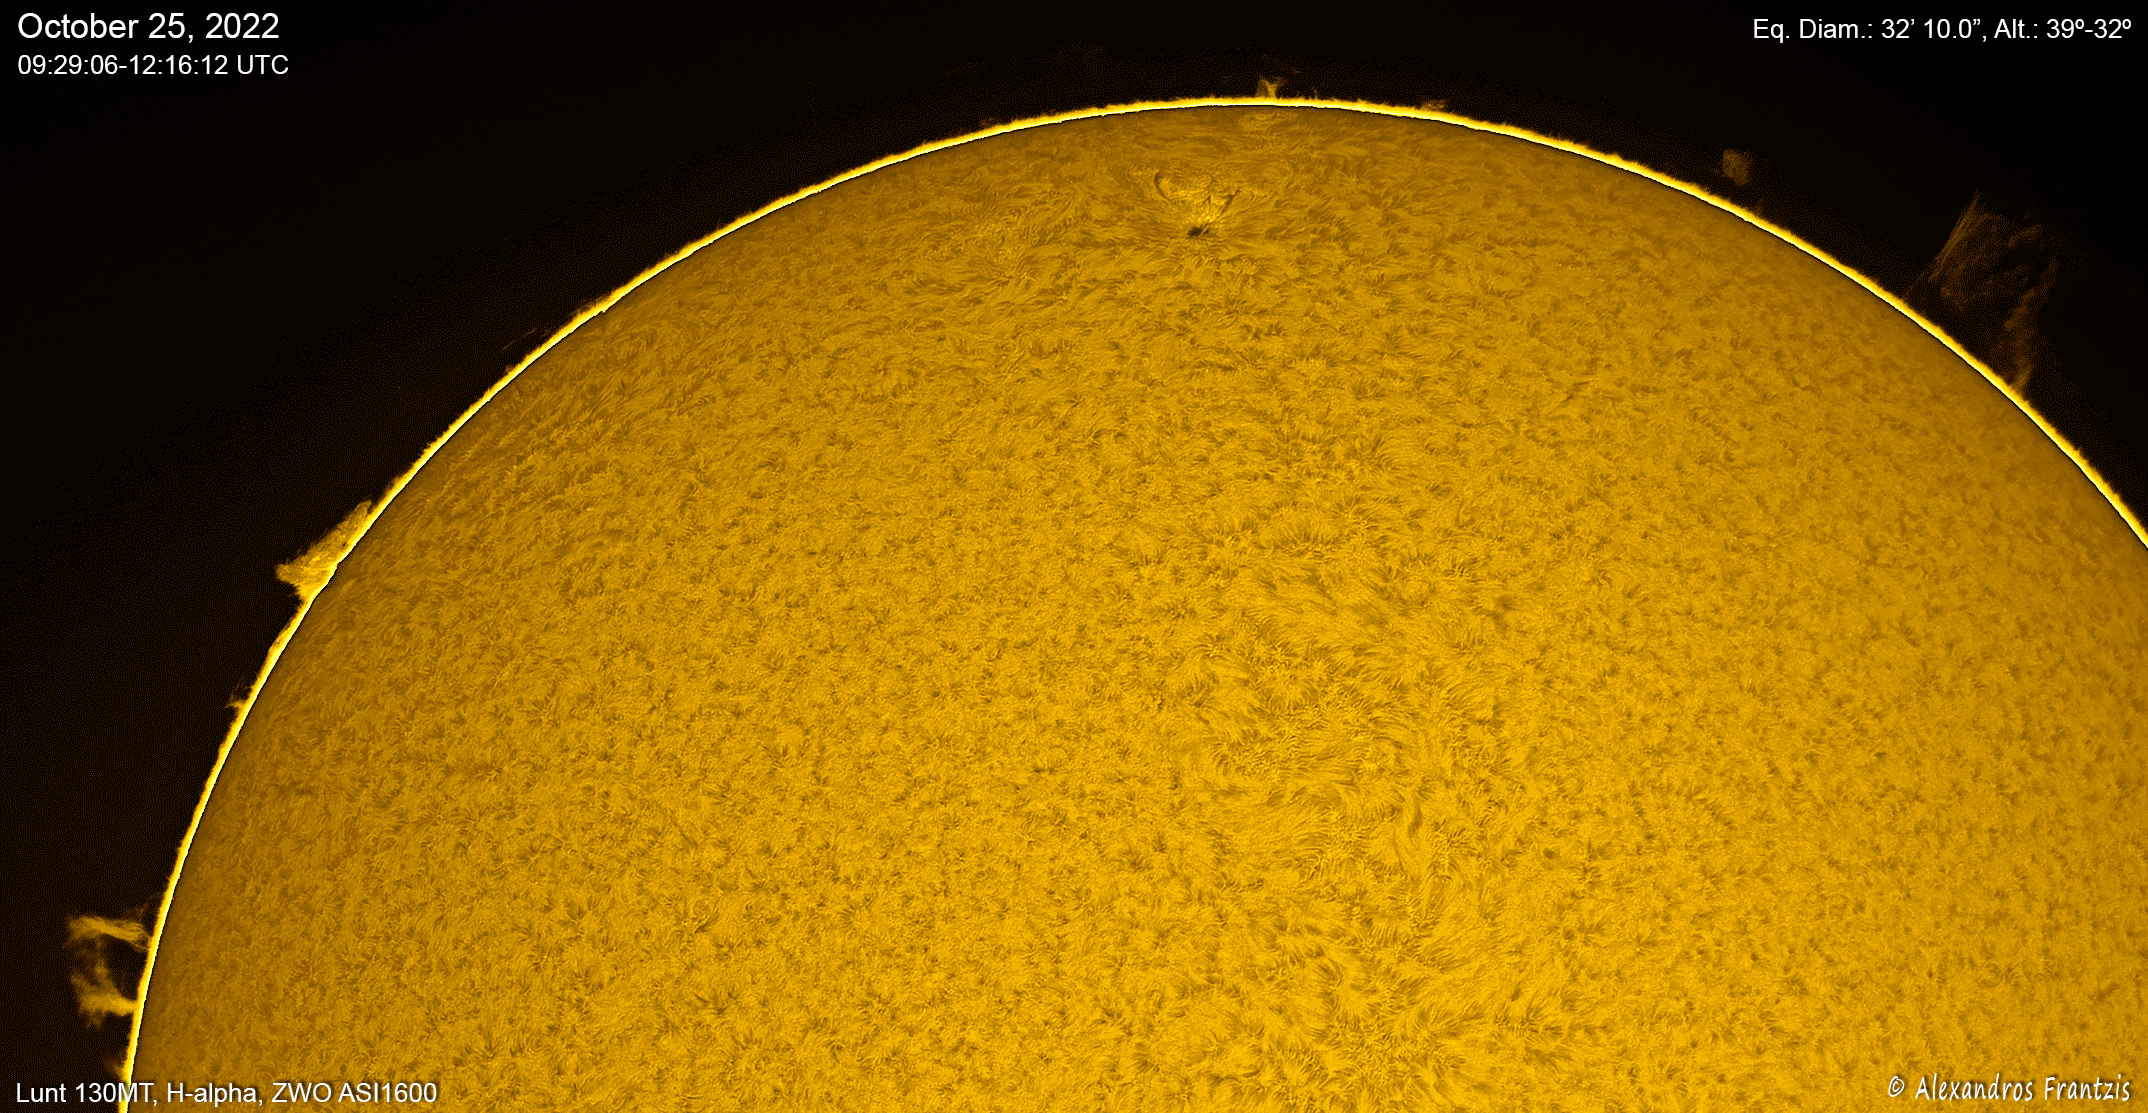 2022-10-25, Solar eclipse animation, 2h 47 min, 84 frames, Lunt130MT, H-alpha, ASI1600, 09_29_06-12_16_12 UTC cropped.gif